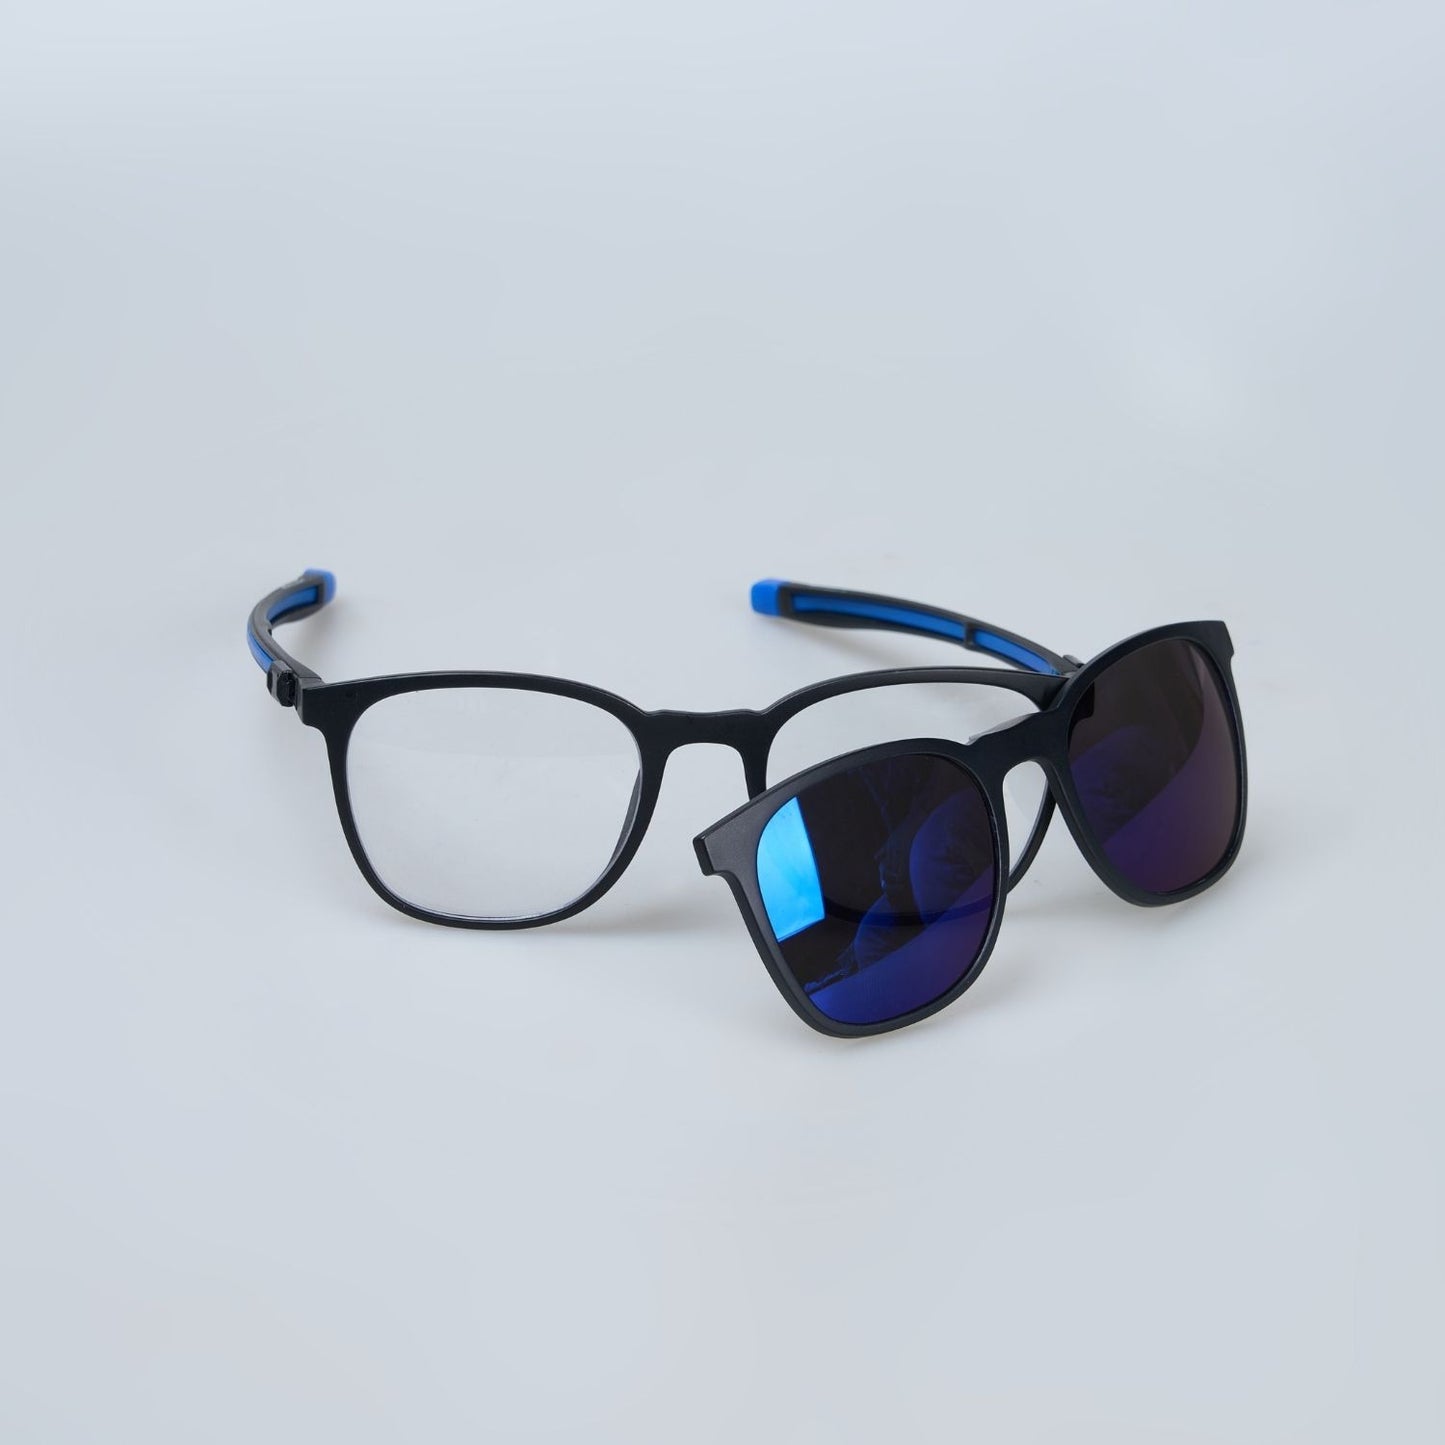 Day-Night Changeable Lens Wayfarer Sunglasses For Men And Women, detachable clip close up